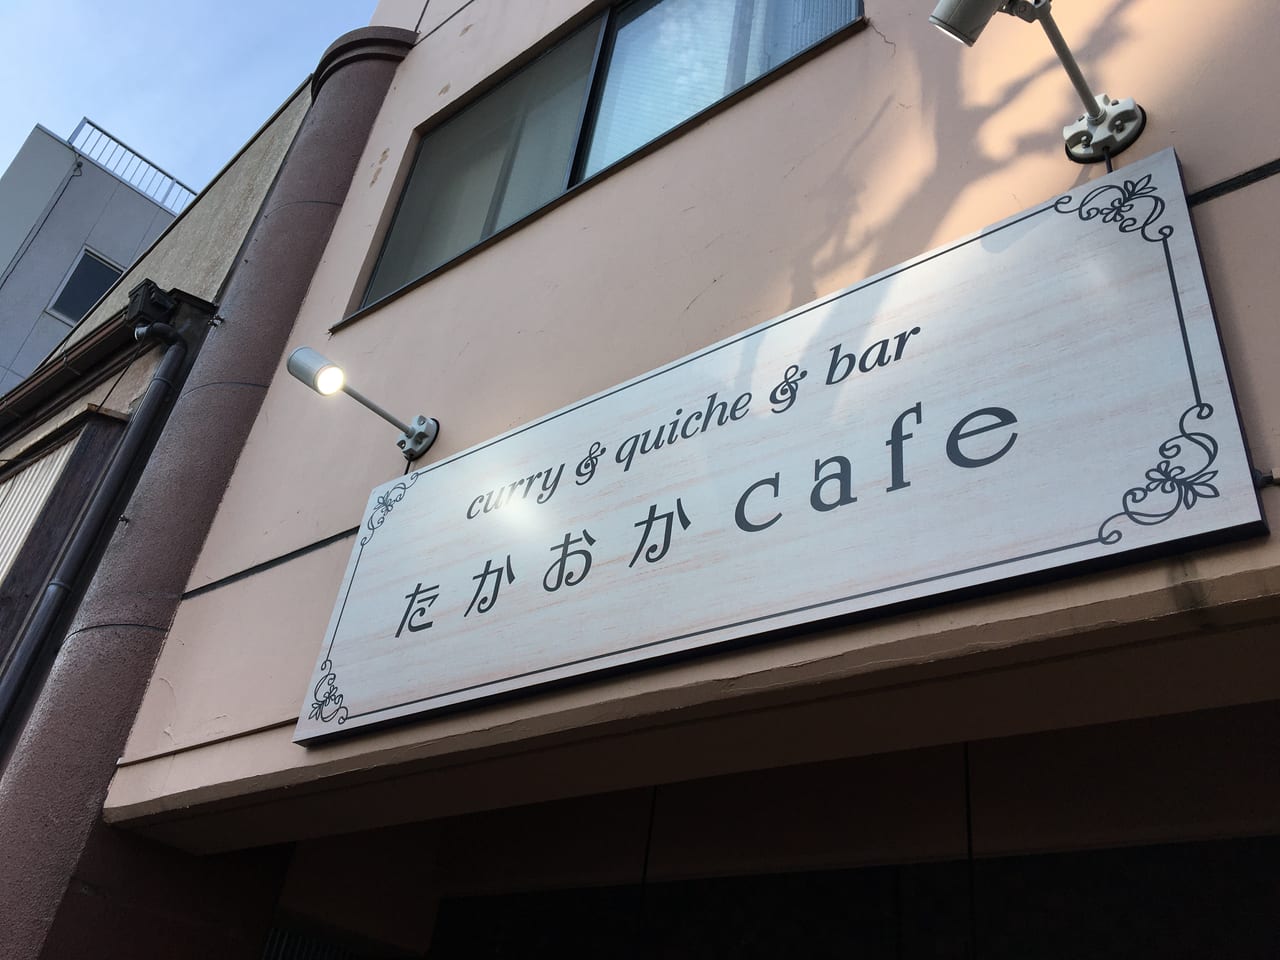 curry&quiche&bar たかおかcafe 